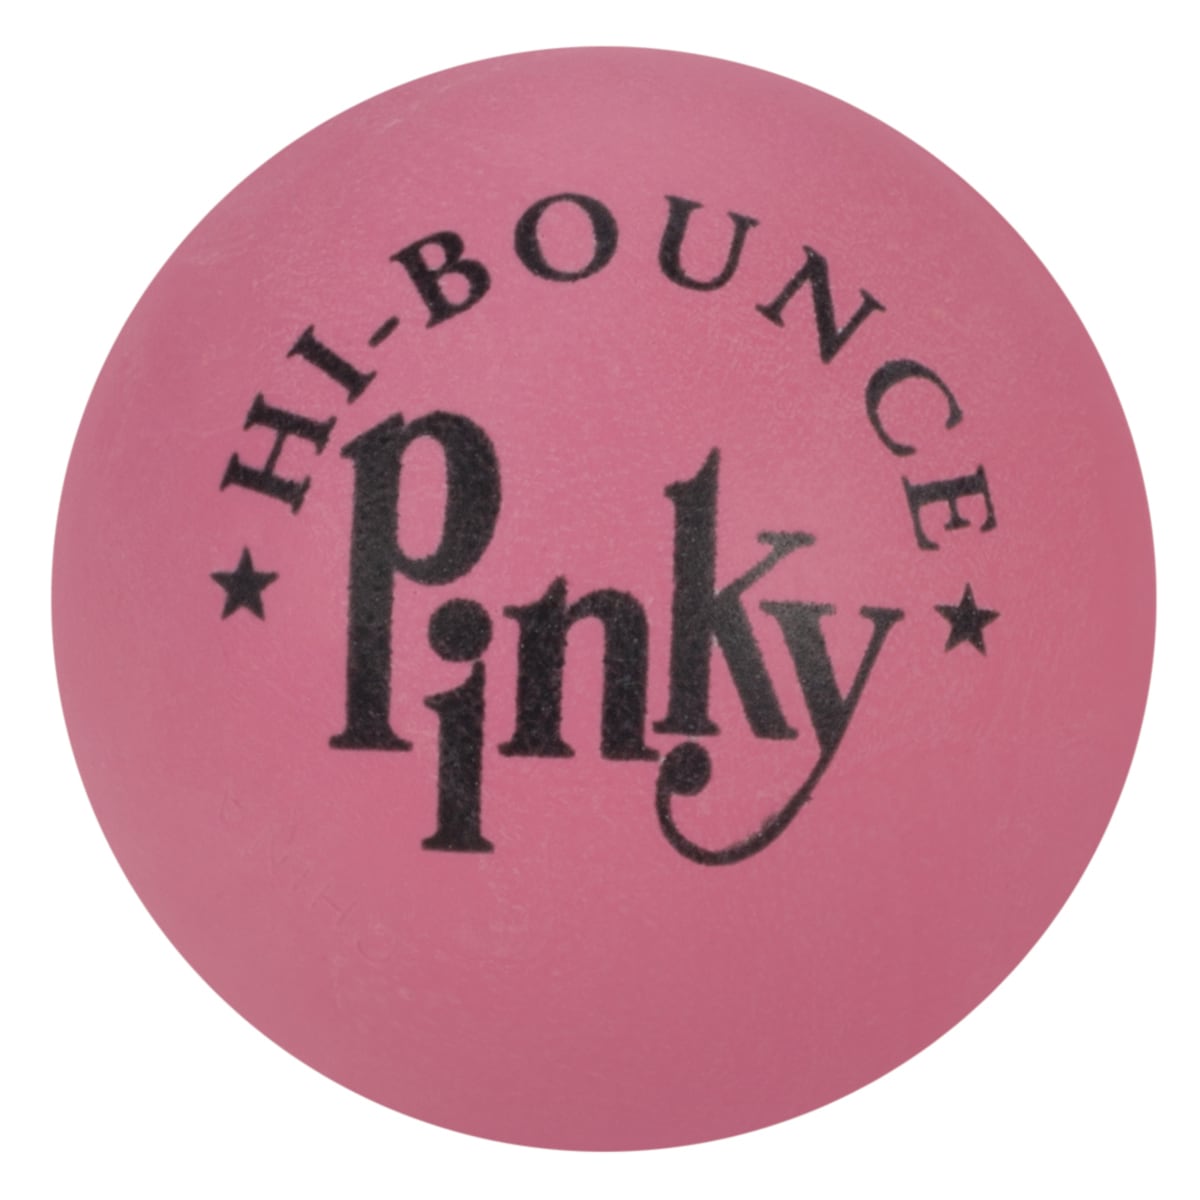 high bounce pinky ball